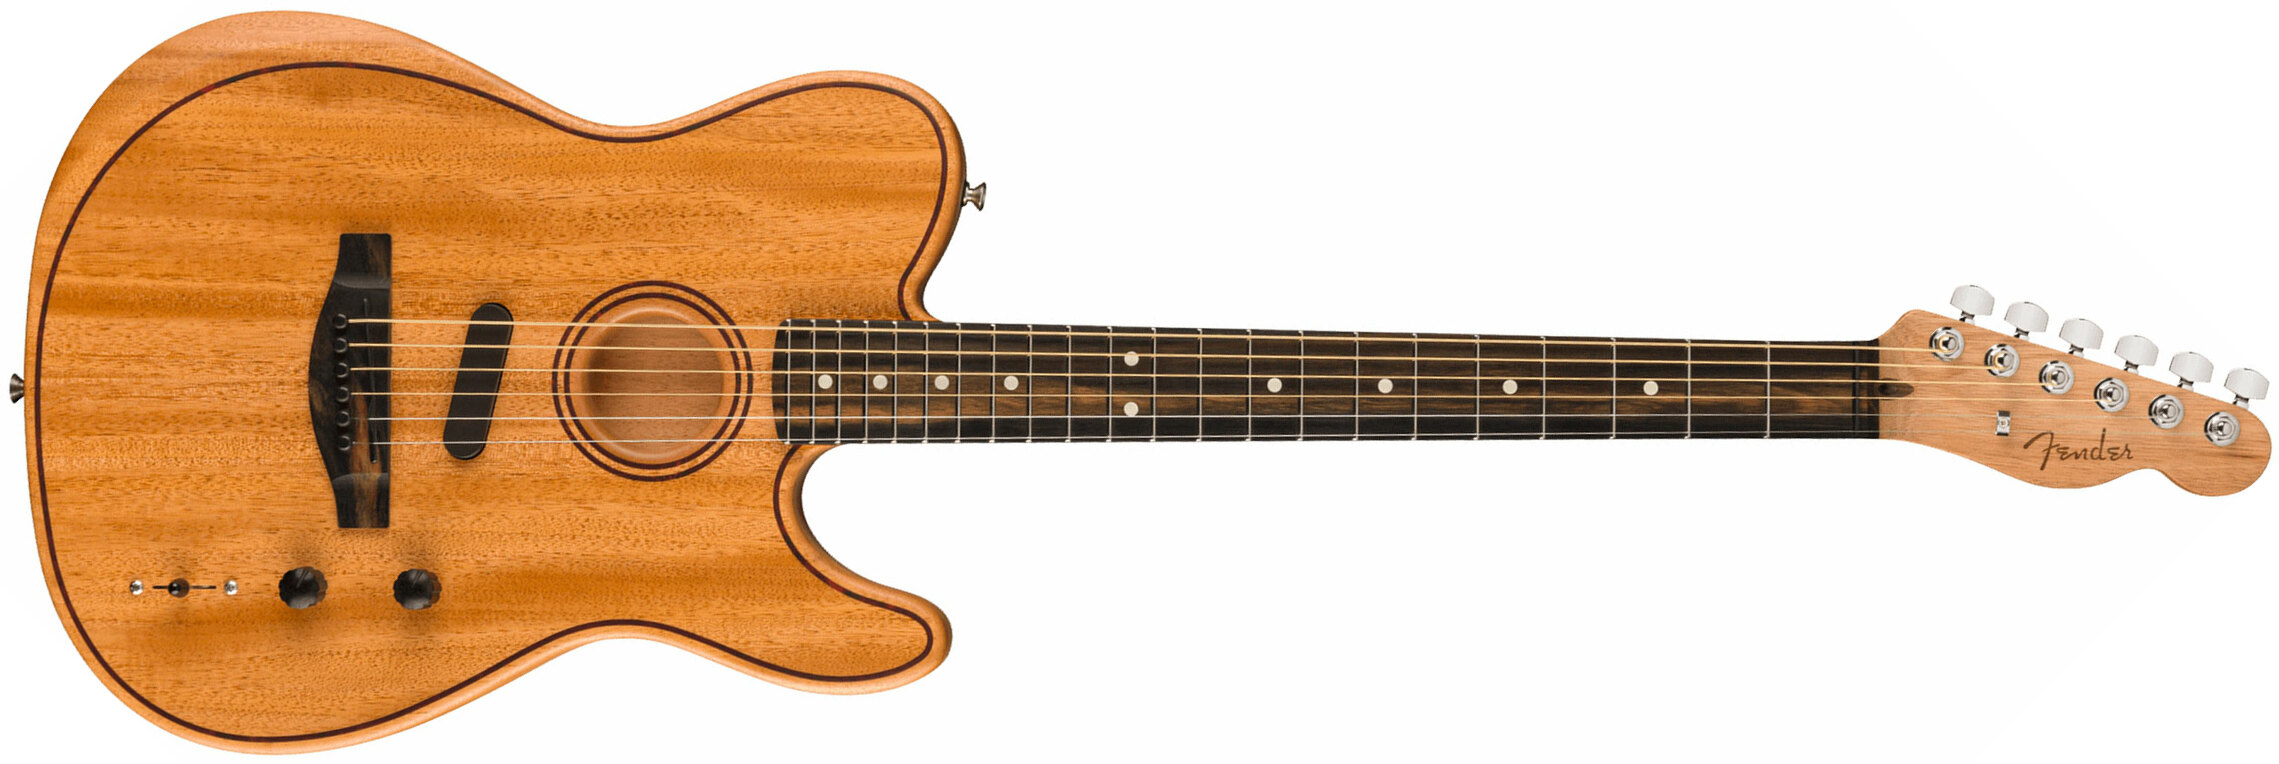 Fender Tele American Acoustasonic All Mahogany Usa Tout Acajou Eb - Natural - Electro acoustic guitar - Main picture